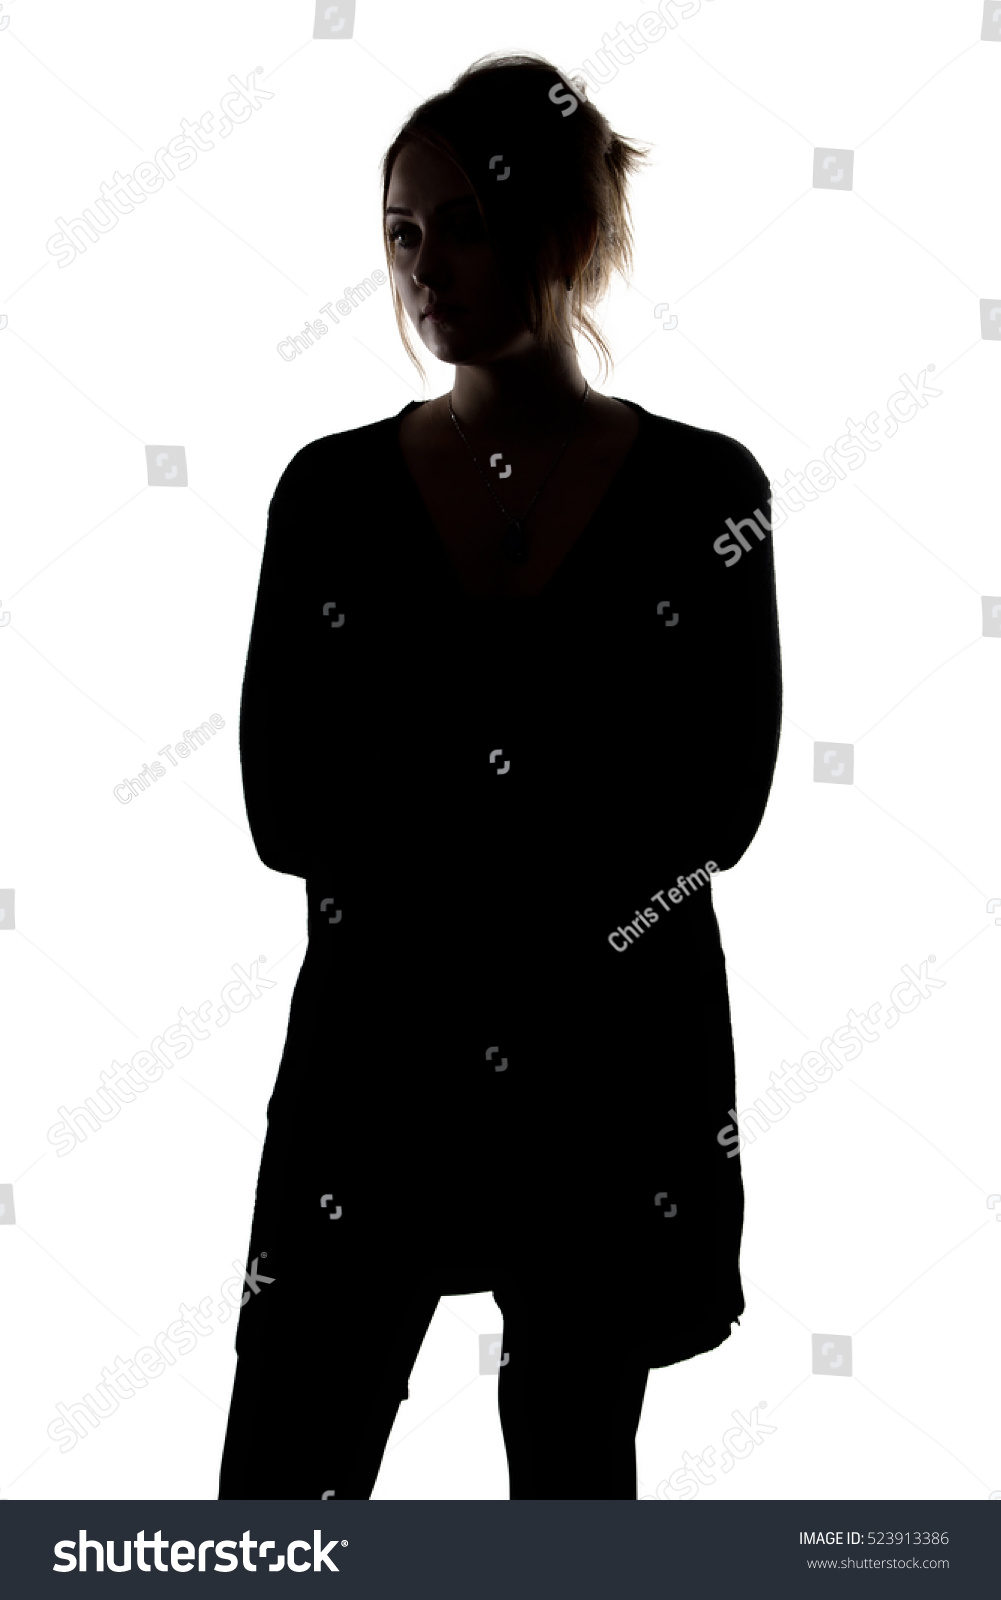 Silhouette of woman in cardigan #523913386